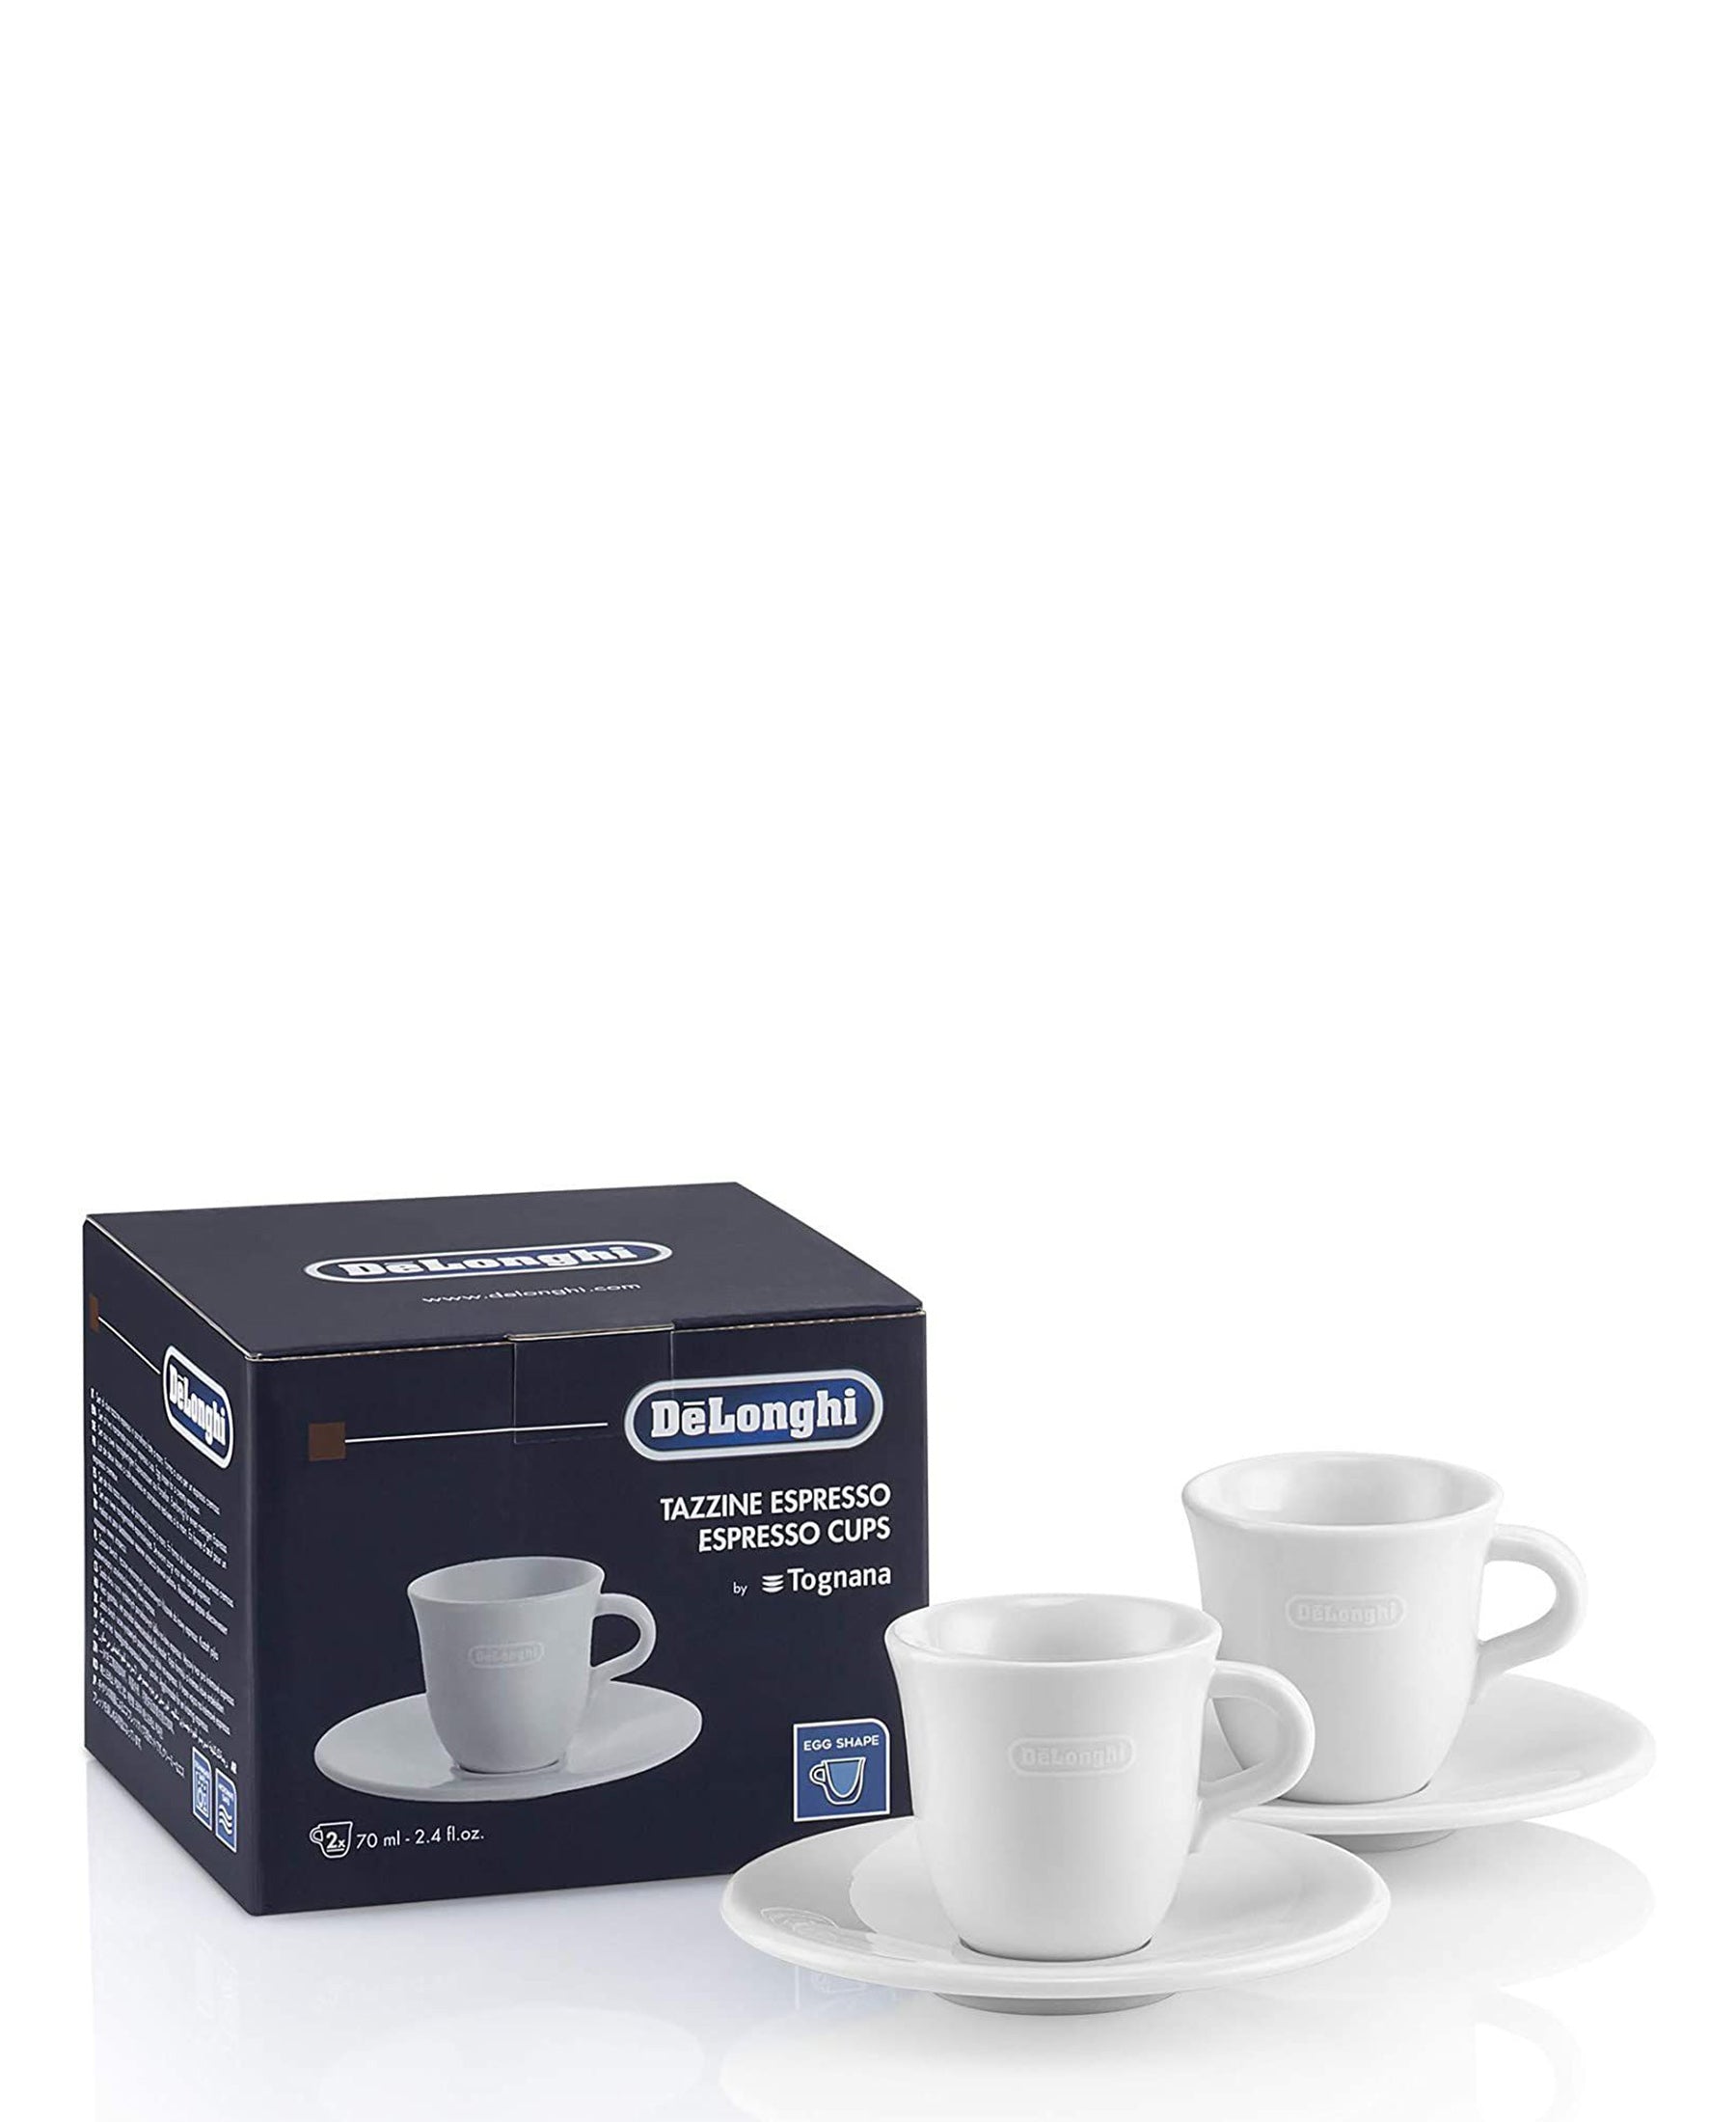 DeLonghi Porcelain Espresso Cups - White